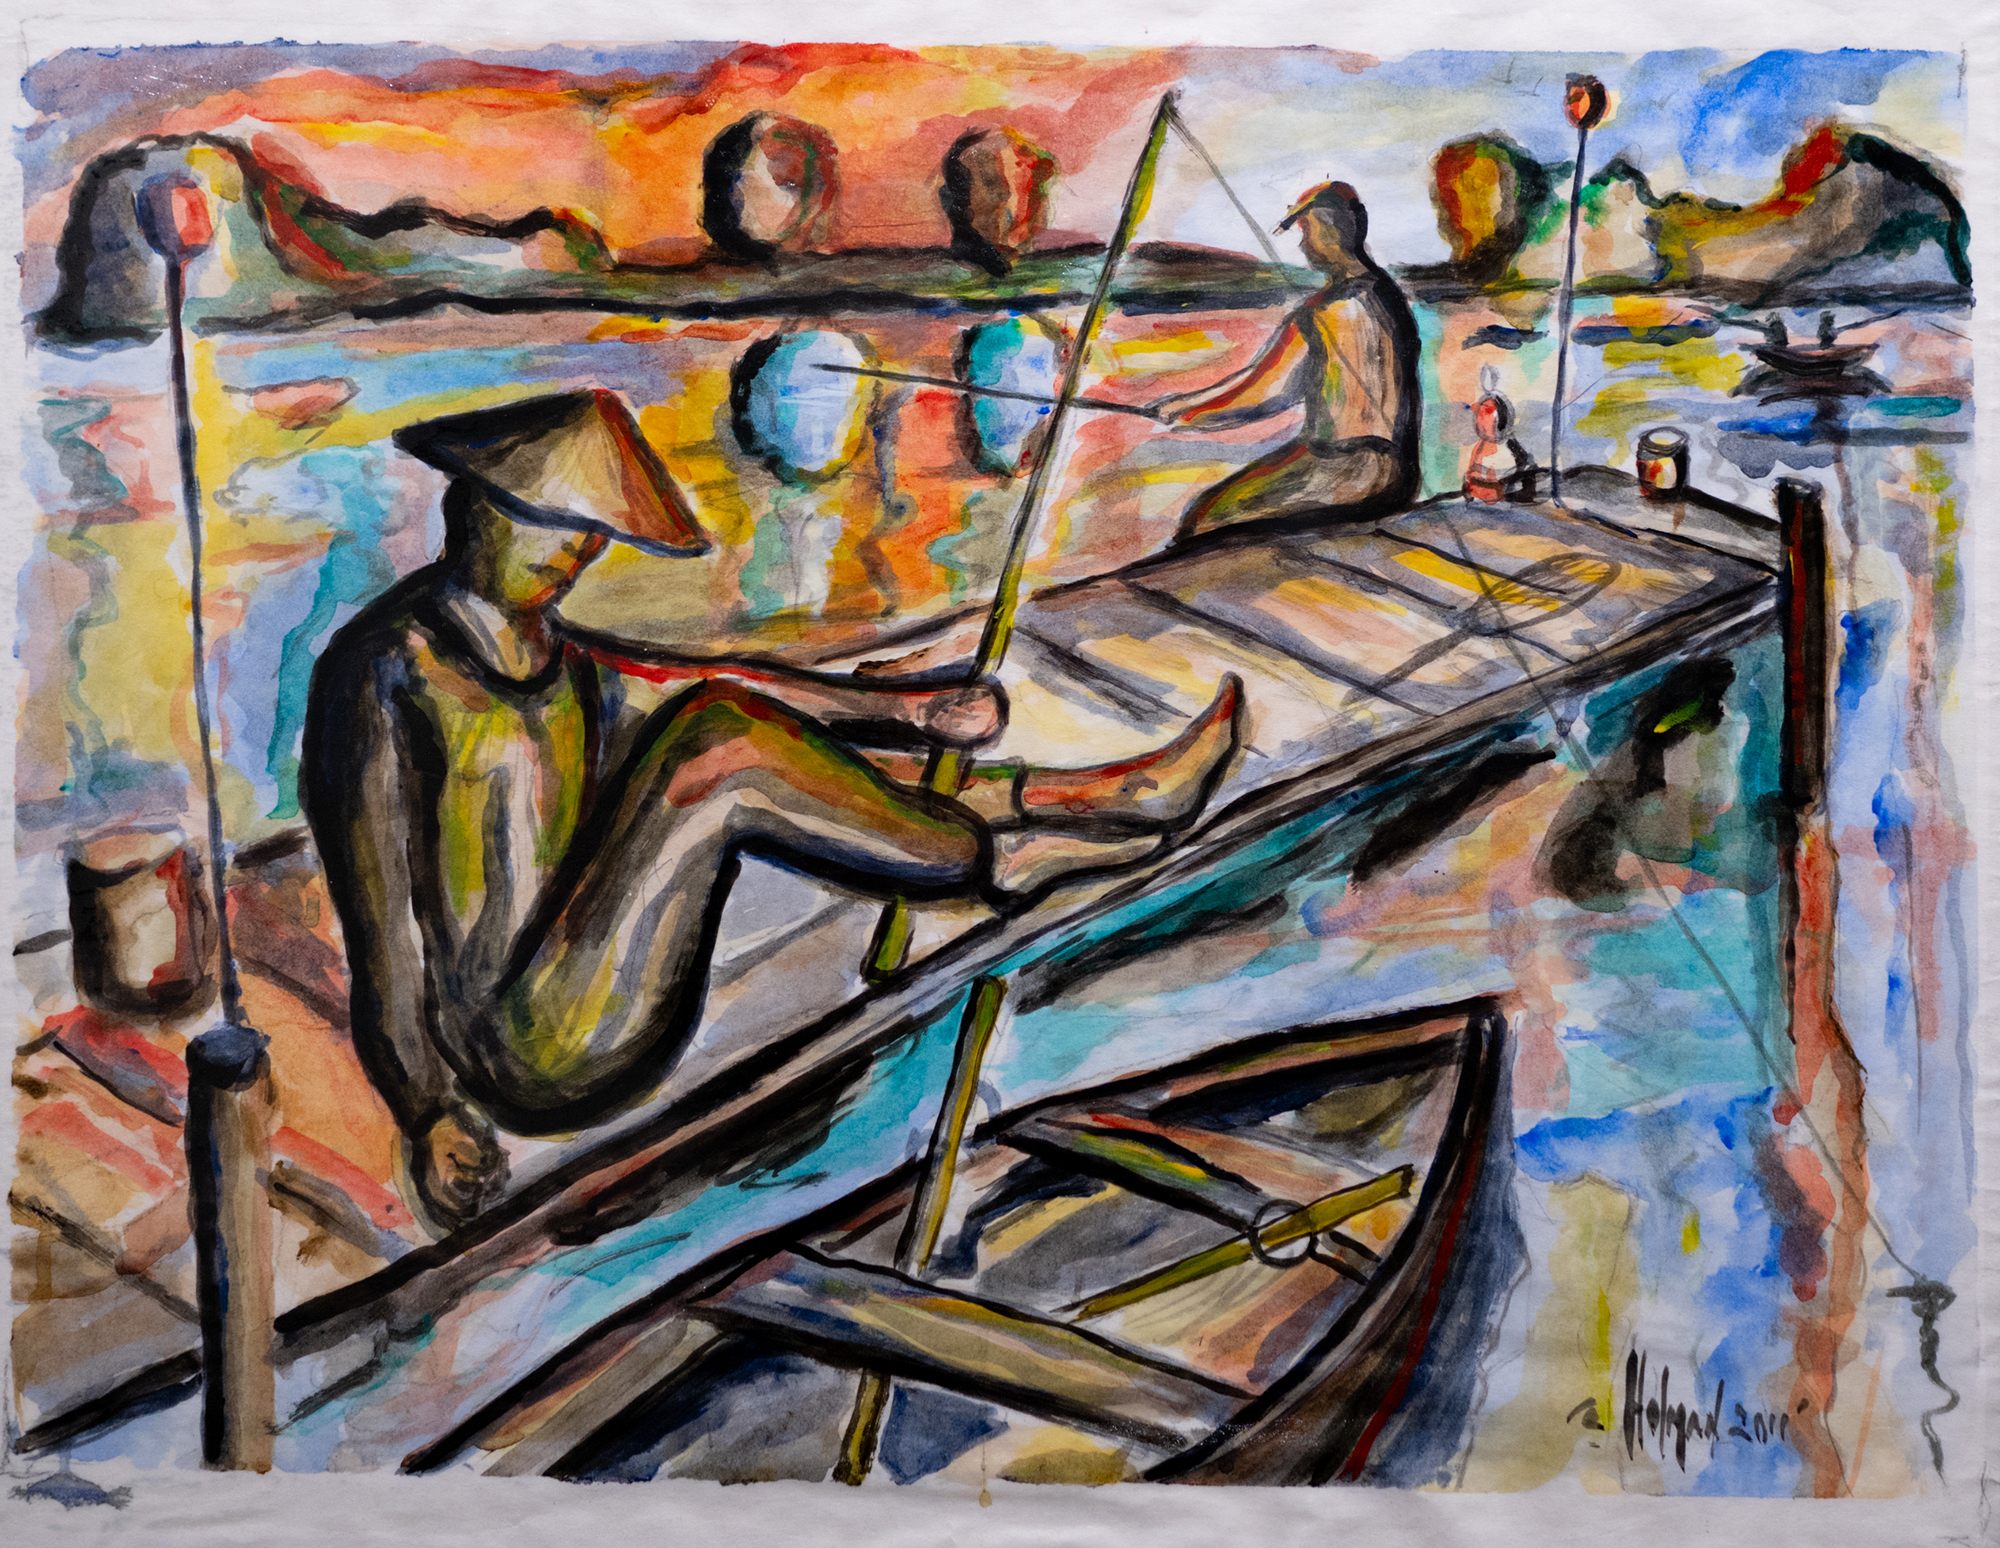 'Fishing' by John Michael Holman